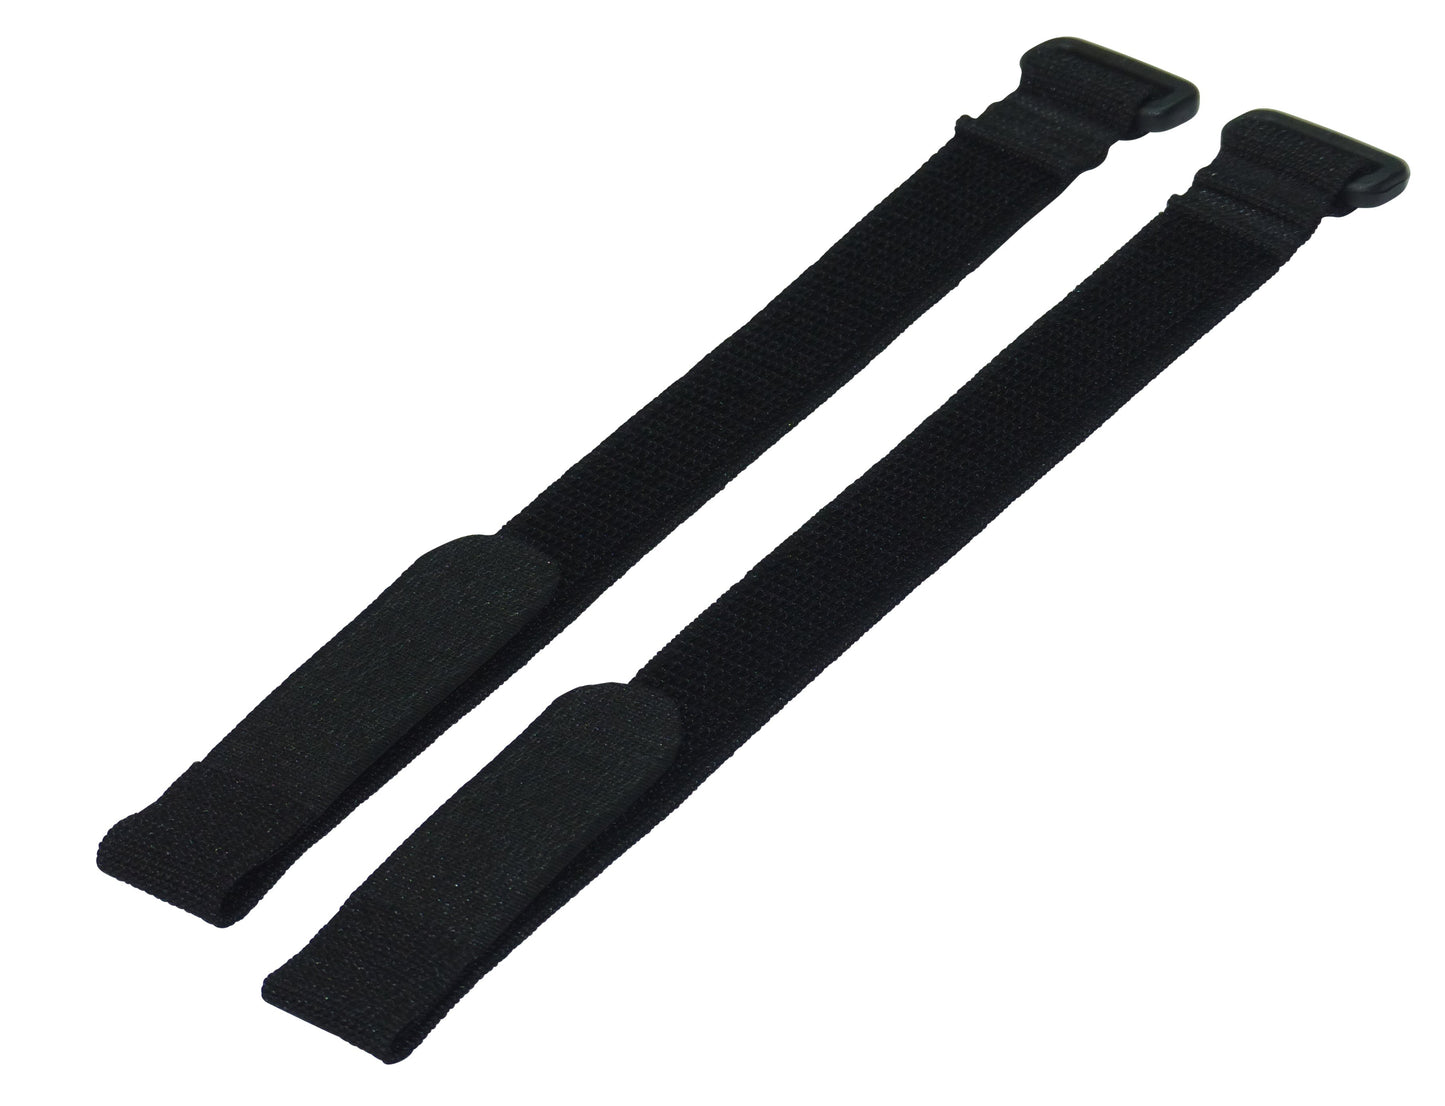 Benristraps 25mm Elastic Hook and Loop Cinch Strap in Black, Pack of Two